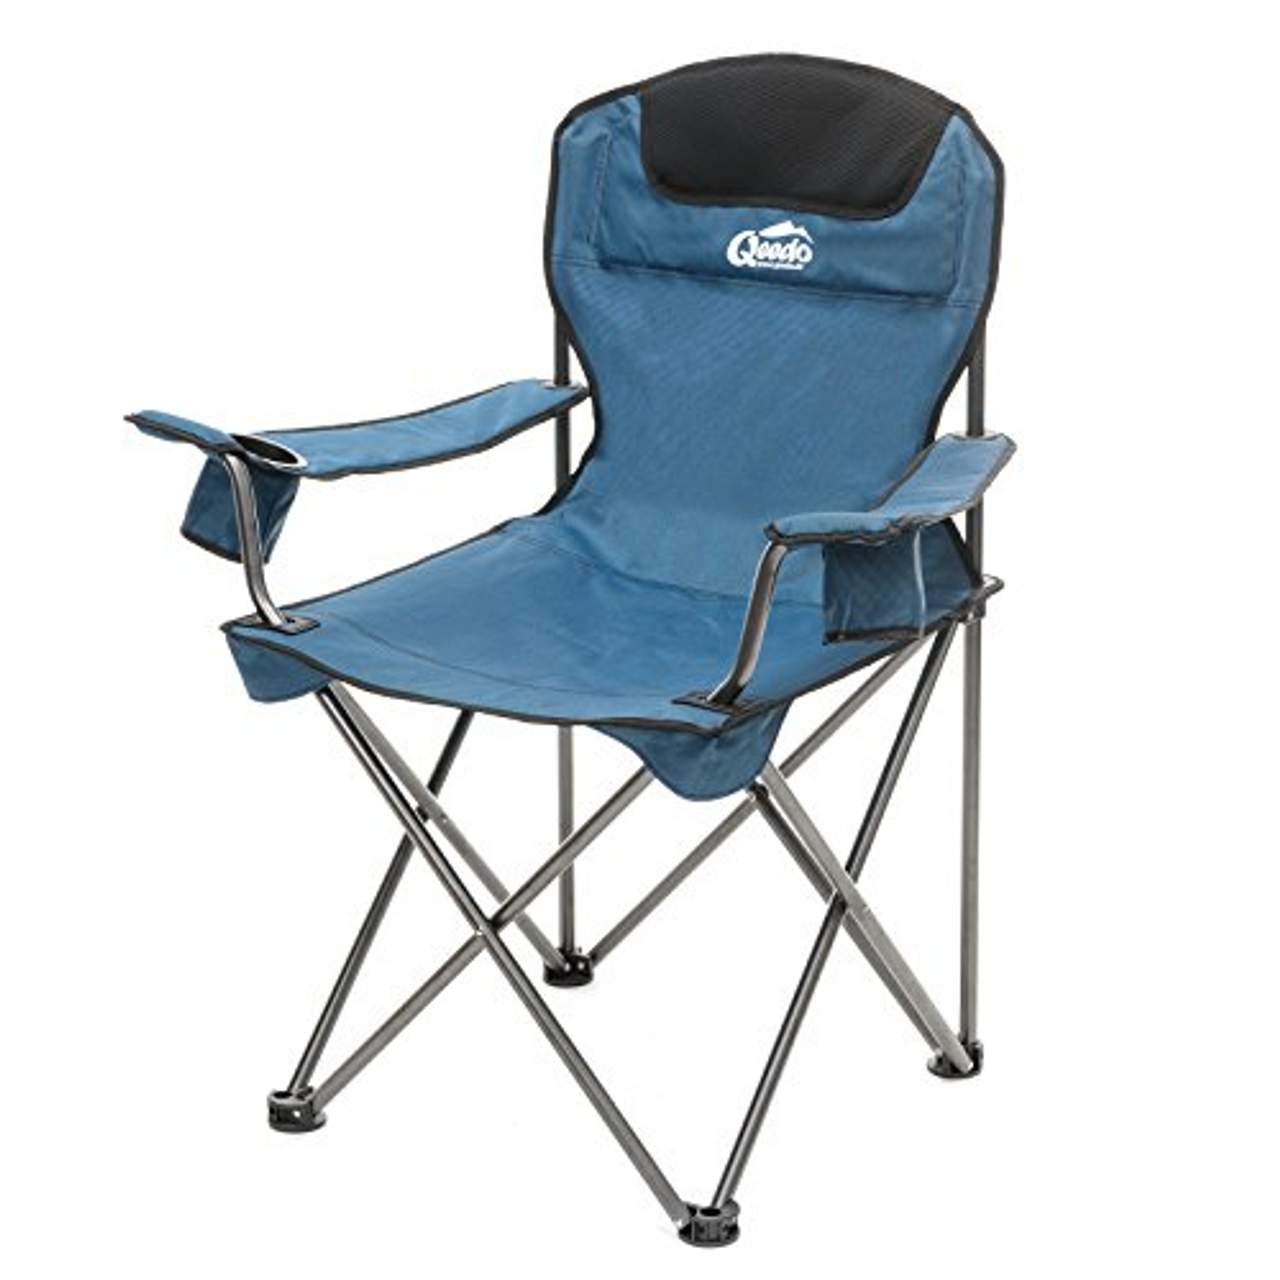 Camping-Stuhl XL Qeedo Johnny bis 150 kg